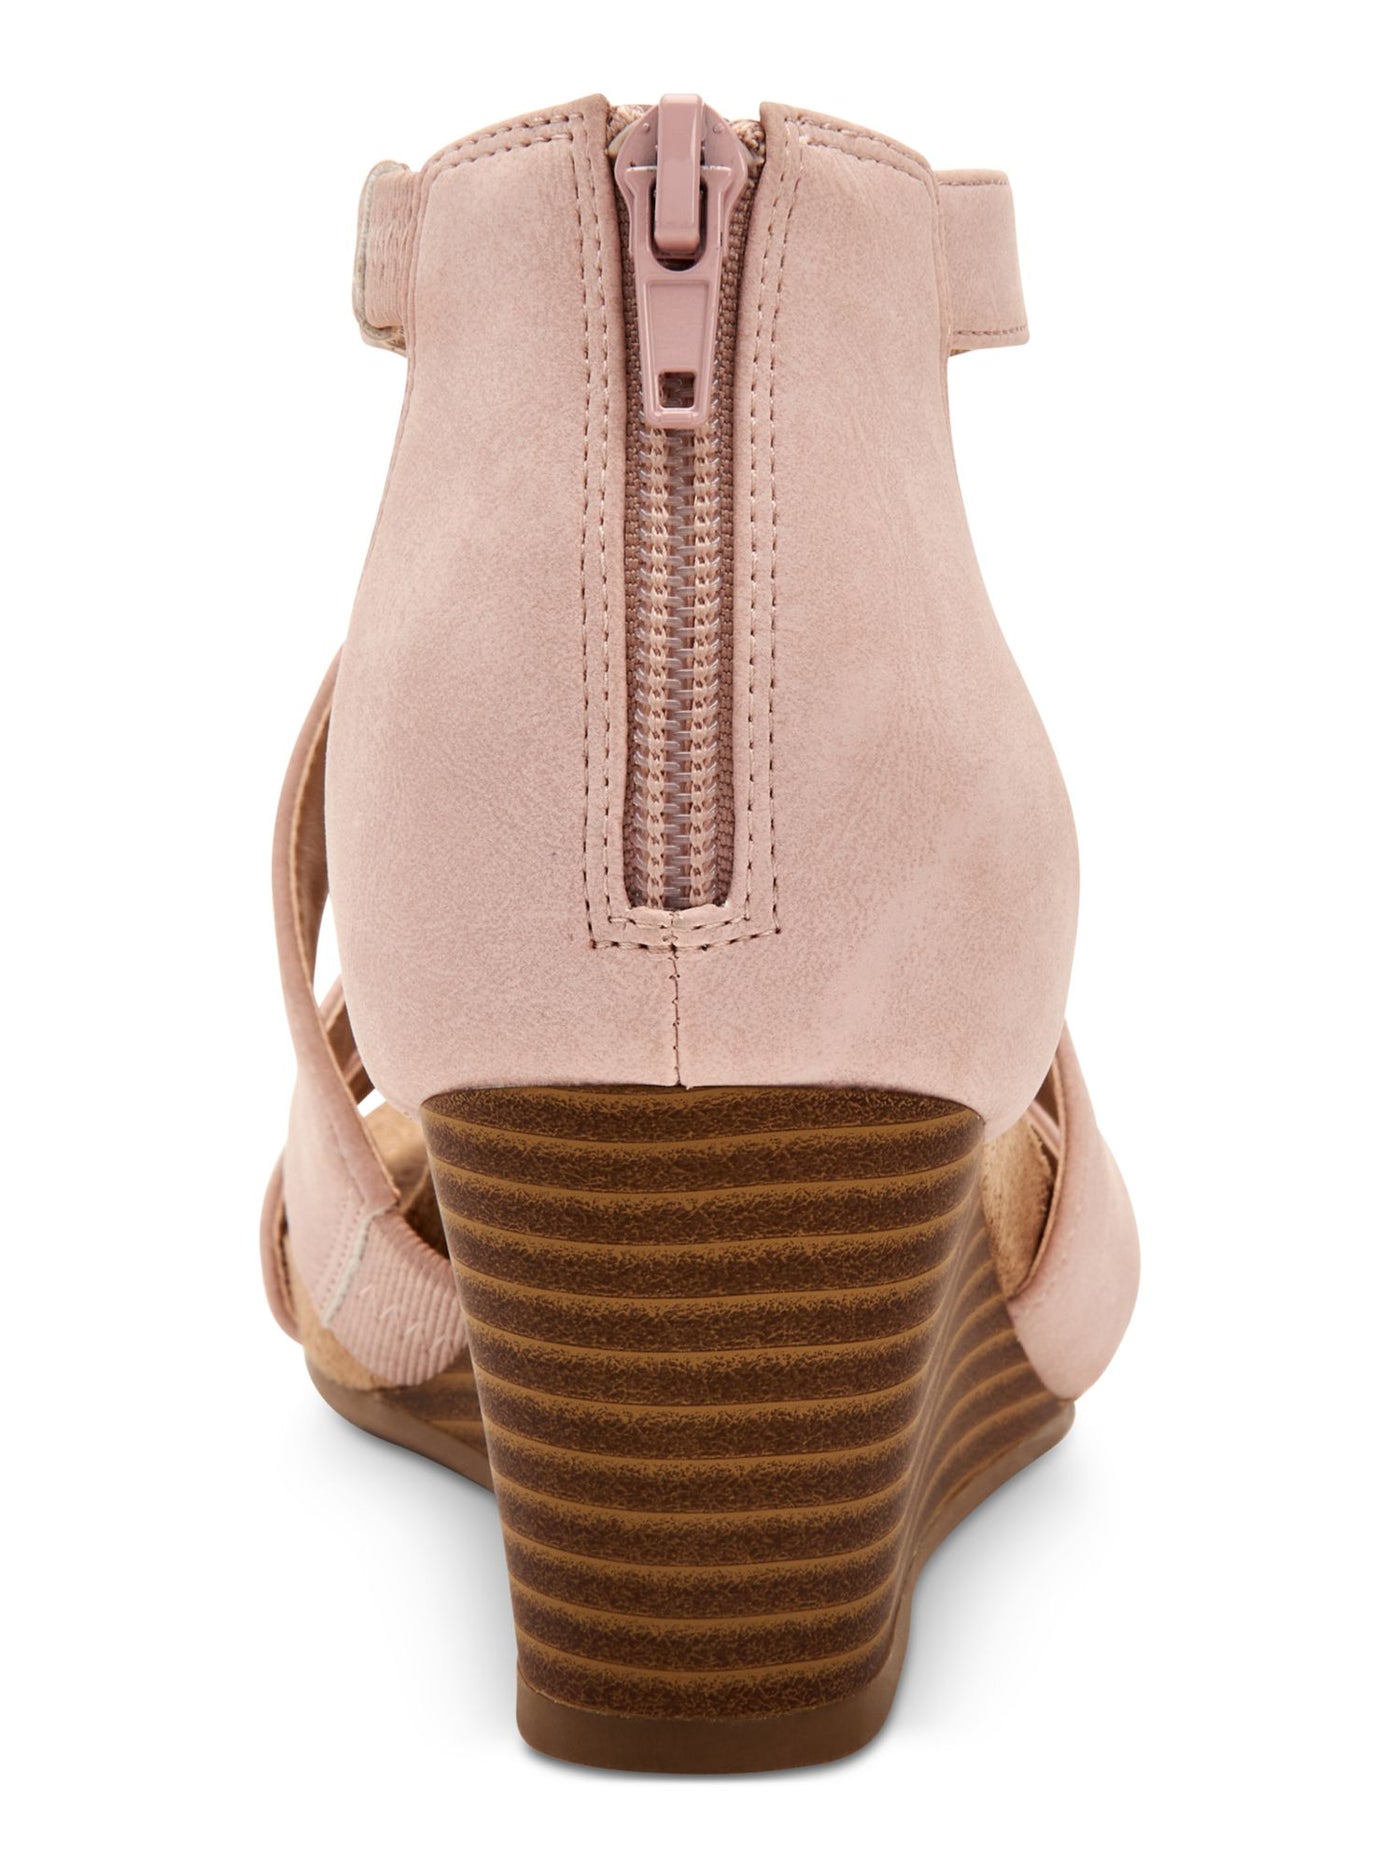 GIANI BERNINI Womens Pink Crisscross Logo Comfort Camdenn Round Toe Wedge Zip-Up Dress Sandals Shoes 8.5 M